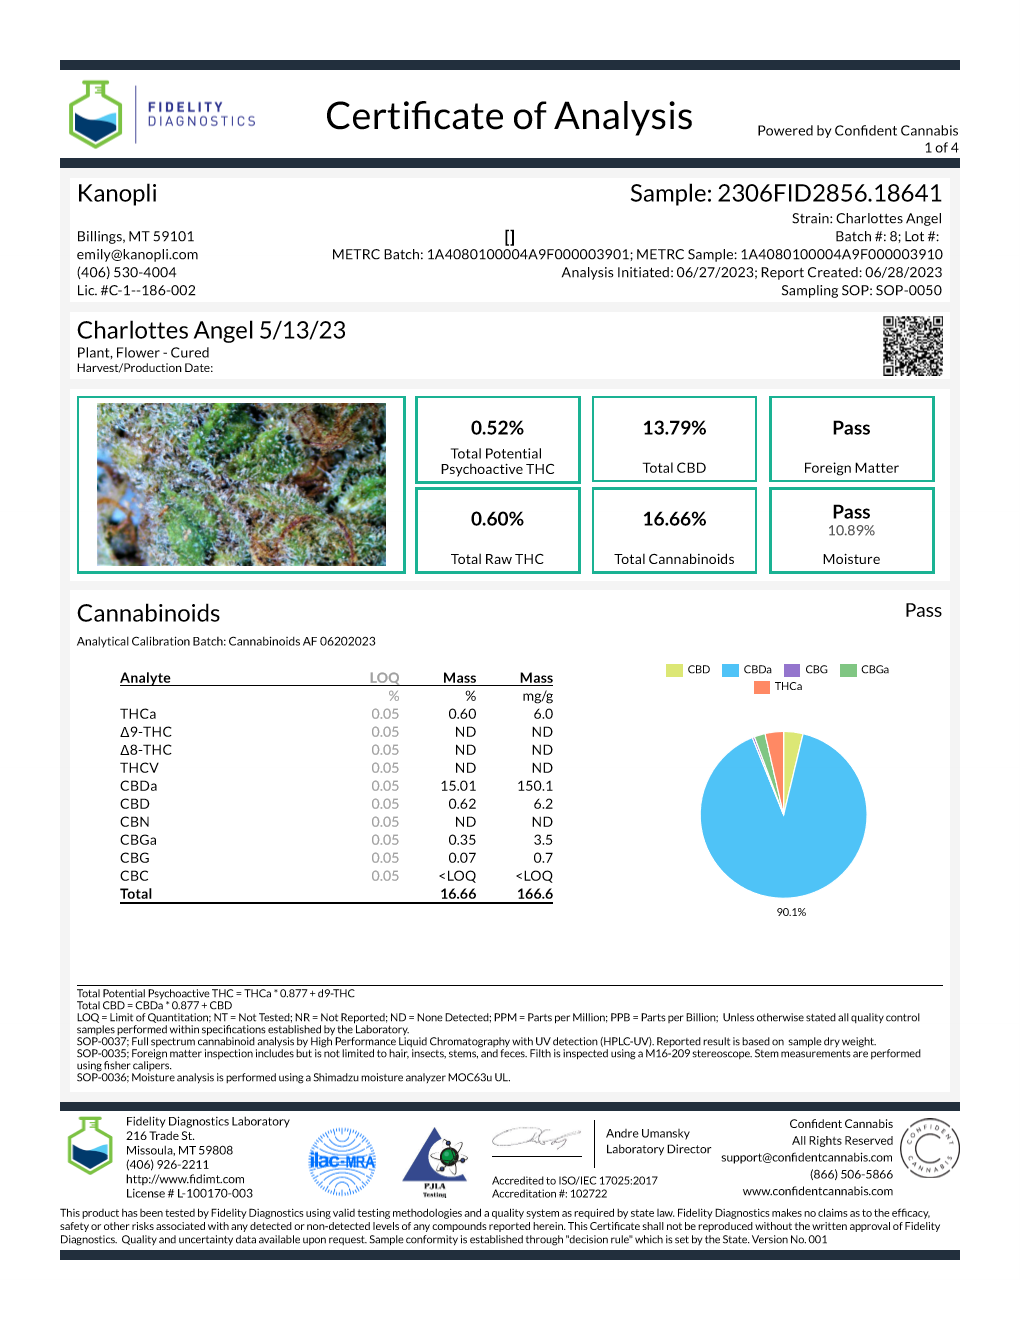 Charlotte's Angel - High CBD 15% CBDa (May 2023) Pre-rolls (1 gram)